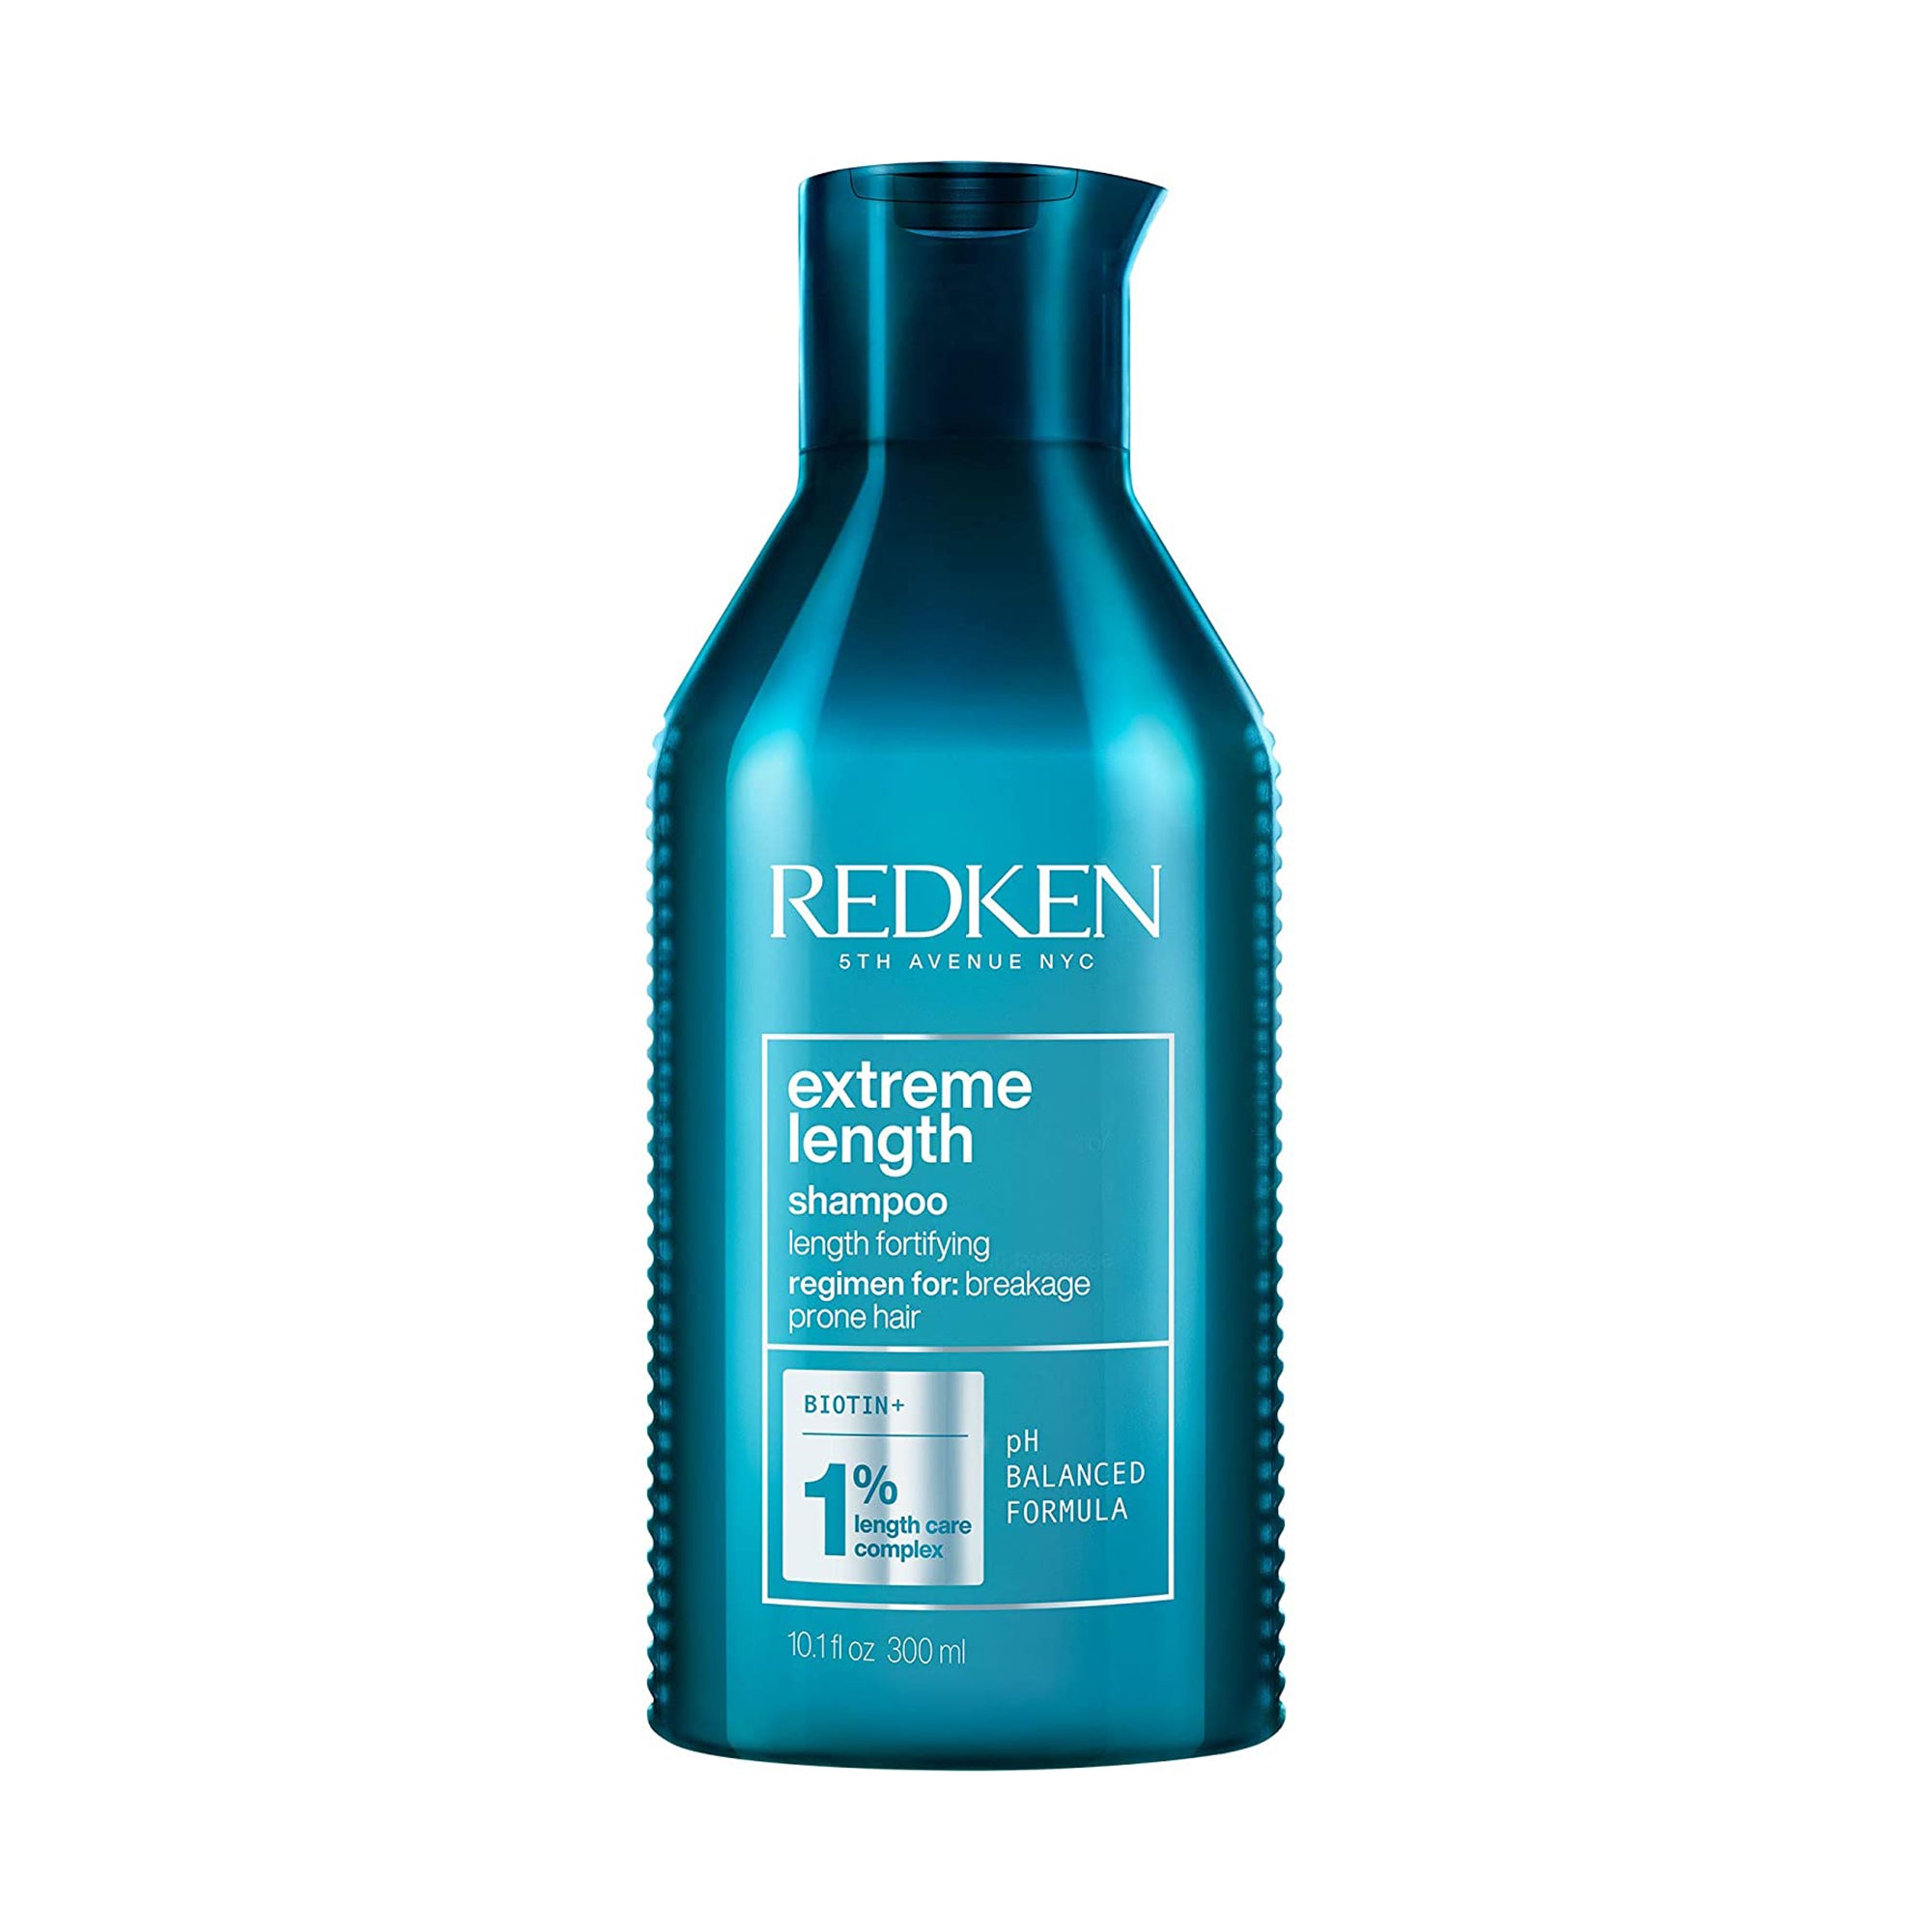 Redken Extreme Length with Biotin Shampoo & Conditioner Duo 10oz ($50 Value) / 10OZ